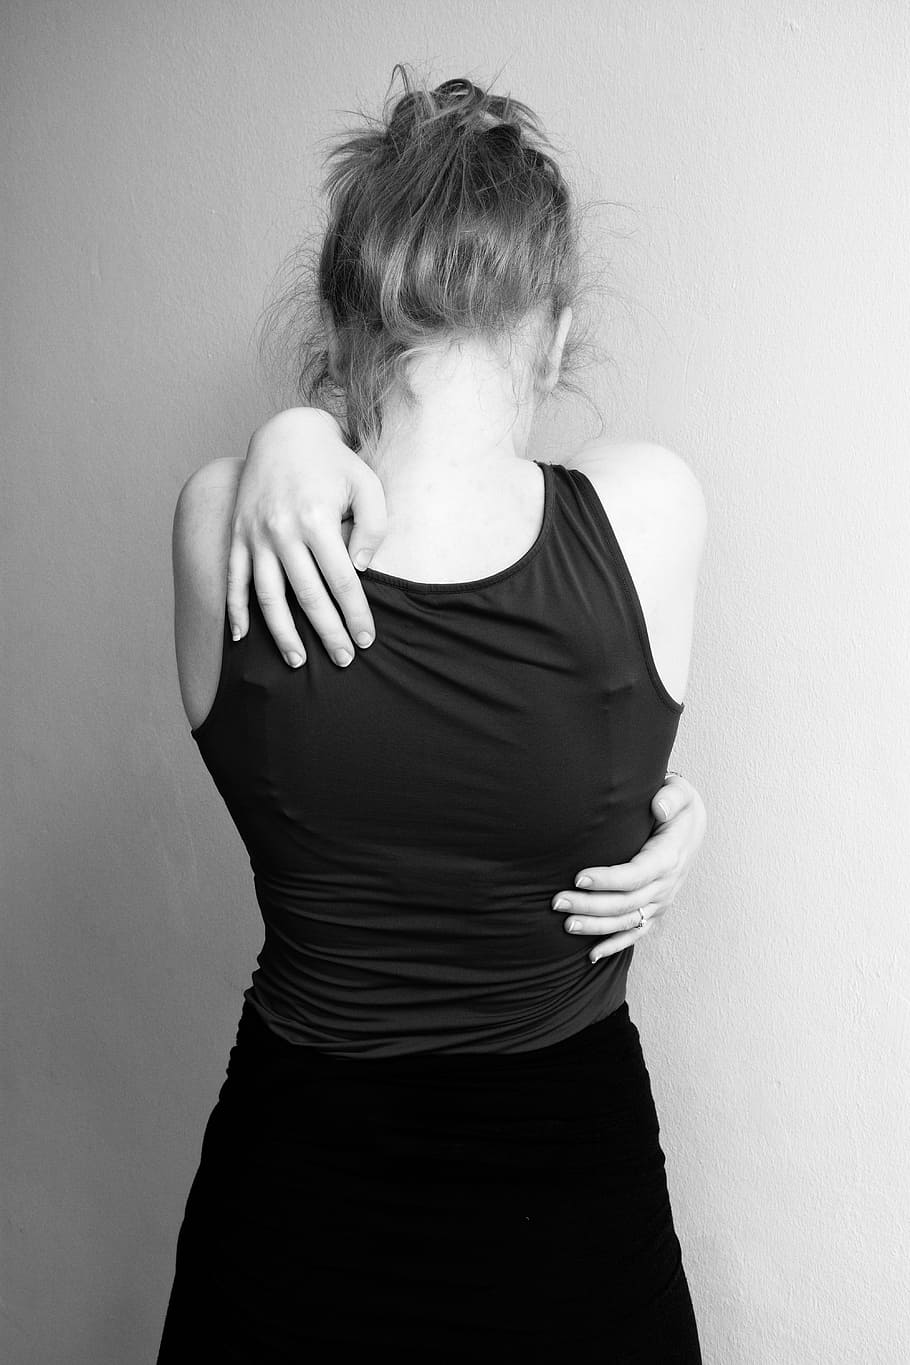 woman in black tank top hands on her back, hug, desperate, sad